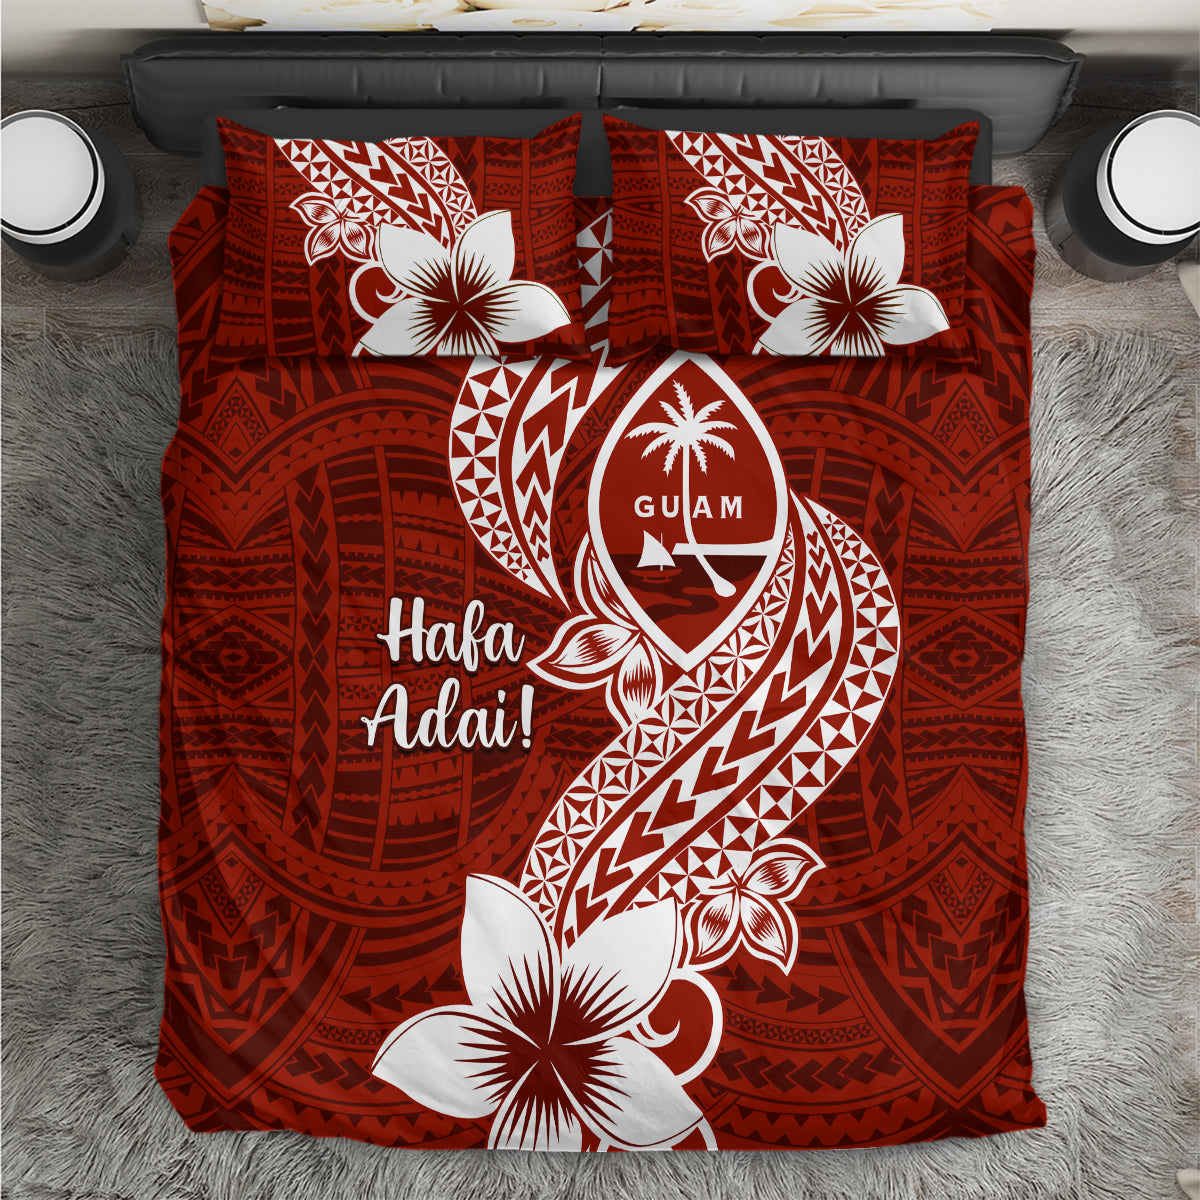 Hafa Adai Guam Bedding Set Polynesian Floral Red Pattern LT01 Red - Polynesian Pride